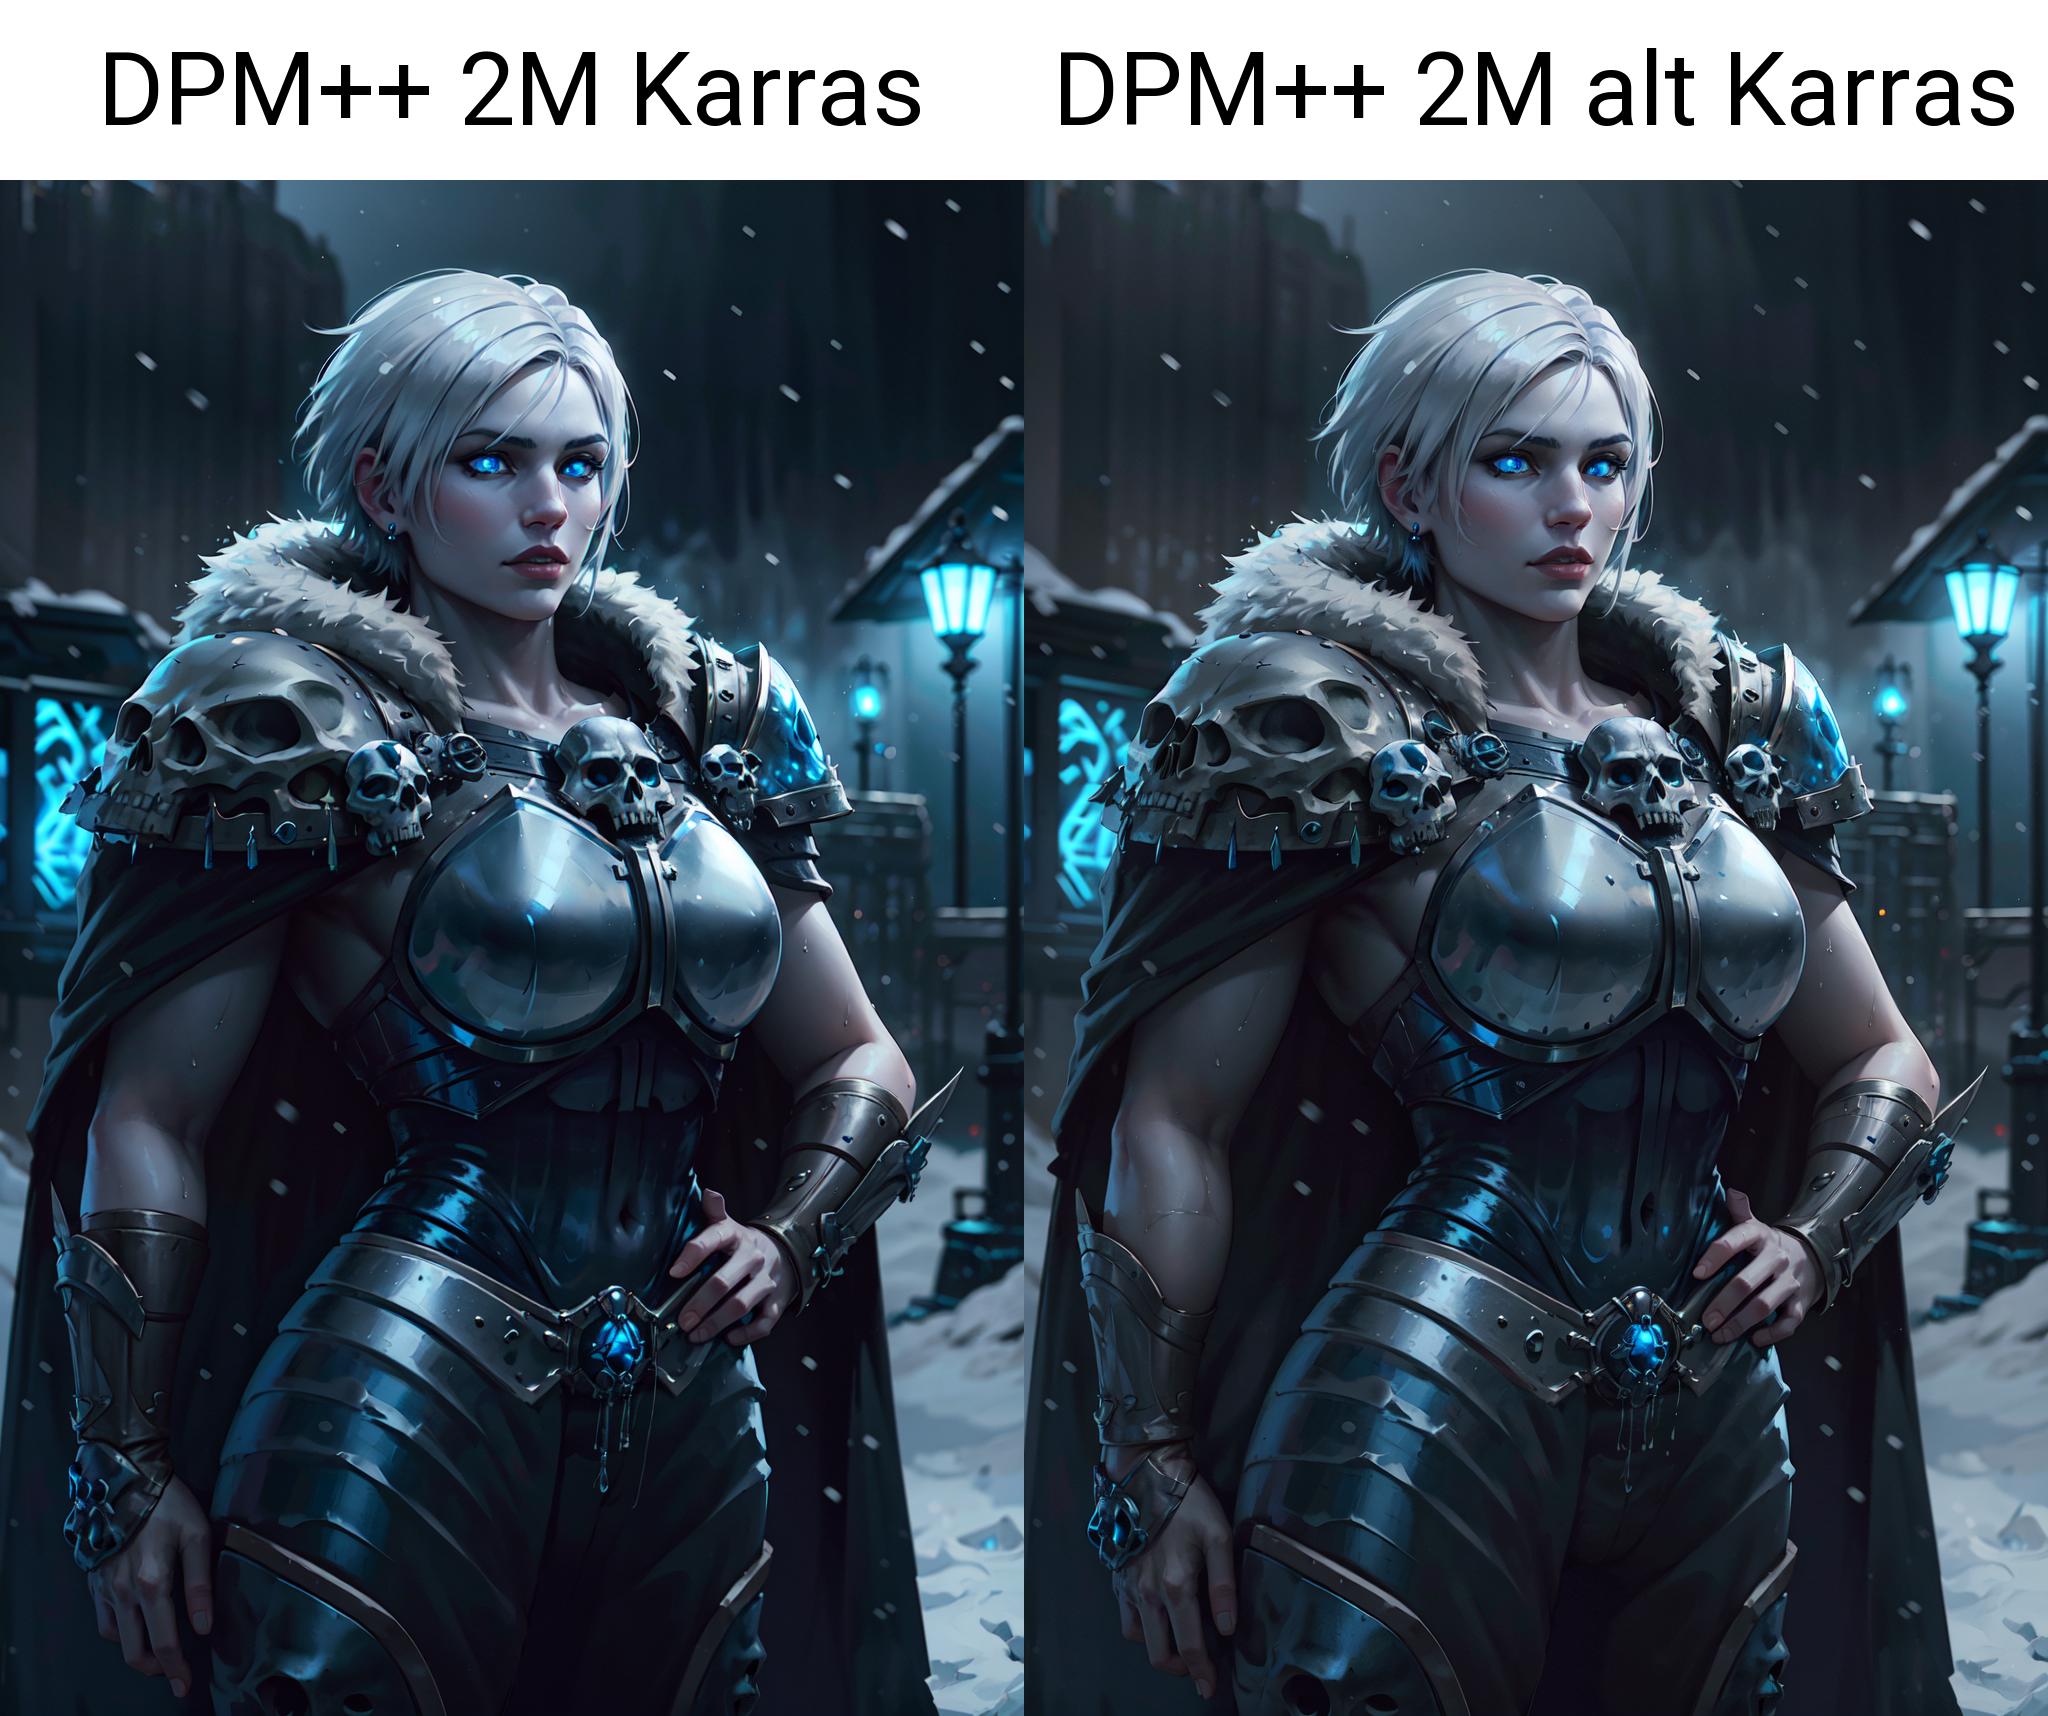 DPM++ 2M alt Karras [ Sampler ] image by sadxzero